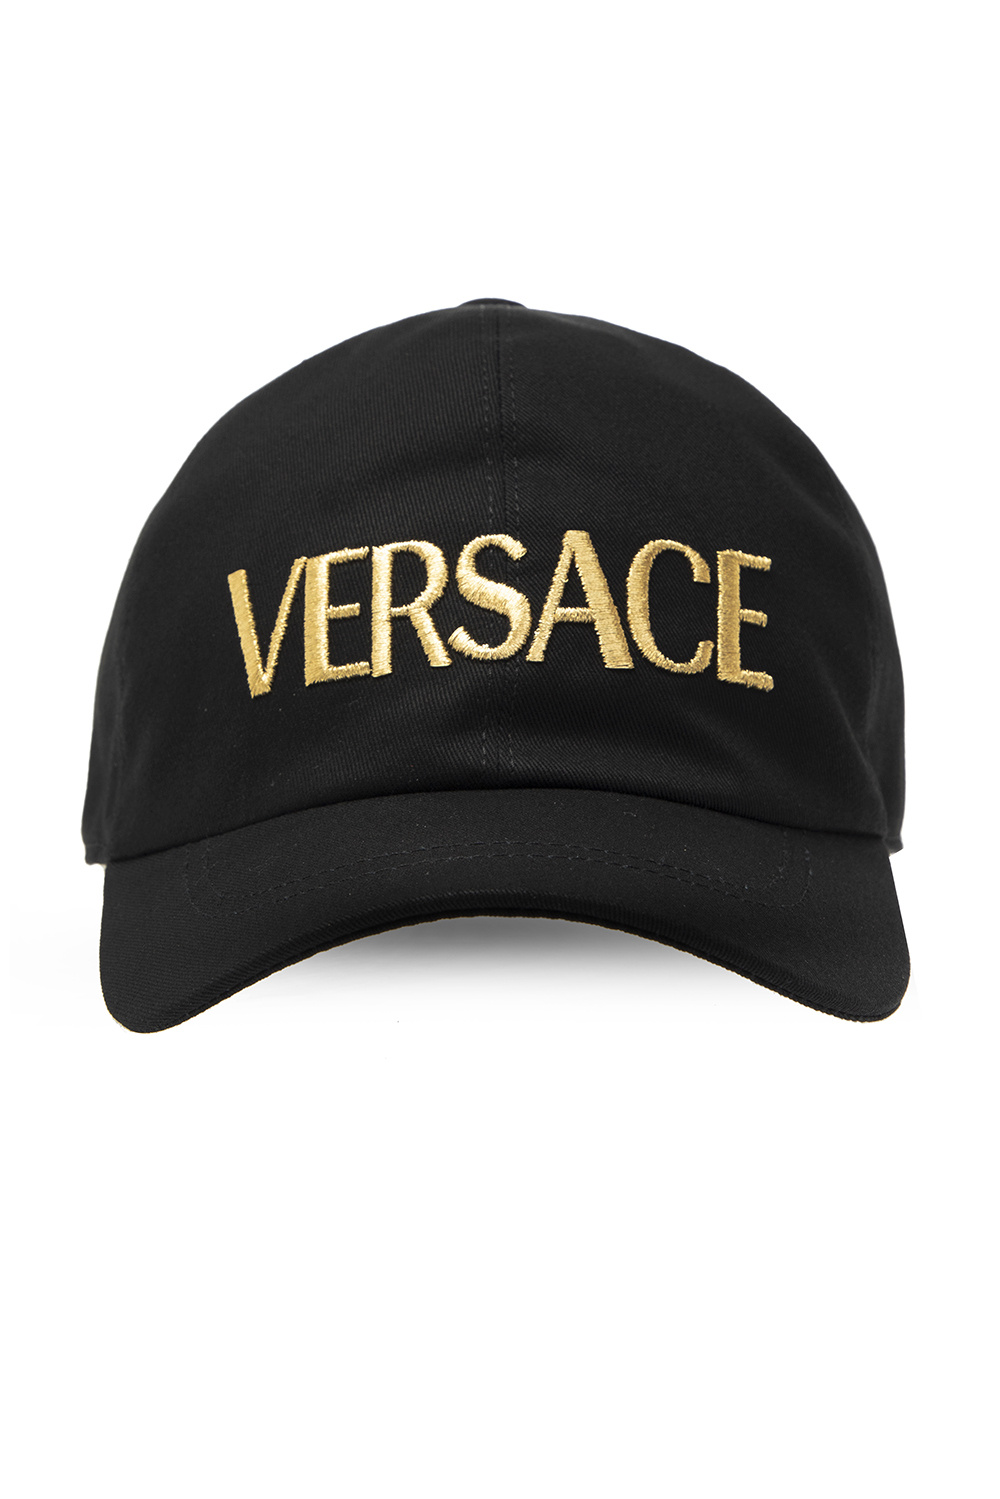 Versace champion champion classic twill hat maroon